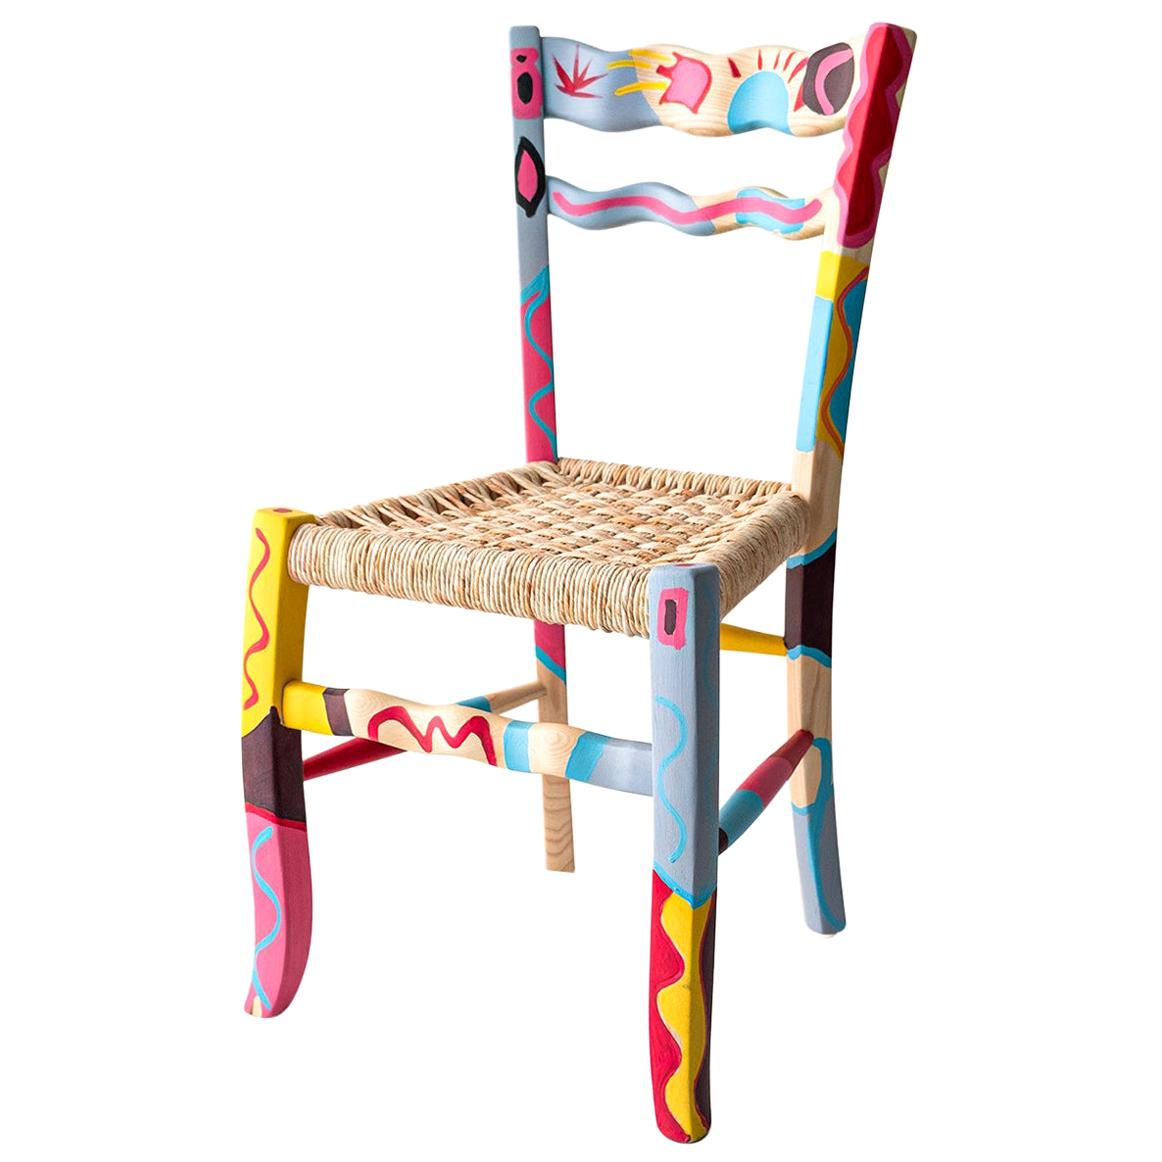 Italian Hand Painted Ashwood Chair "a Signurina - Taormina" by MYOP For Sale